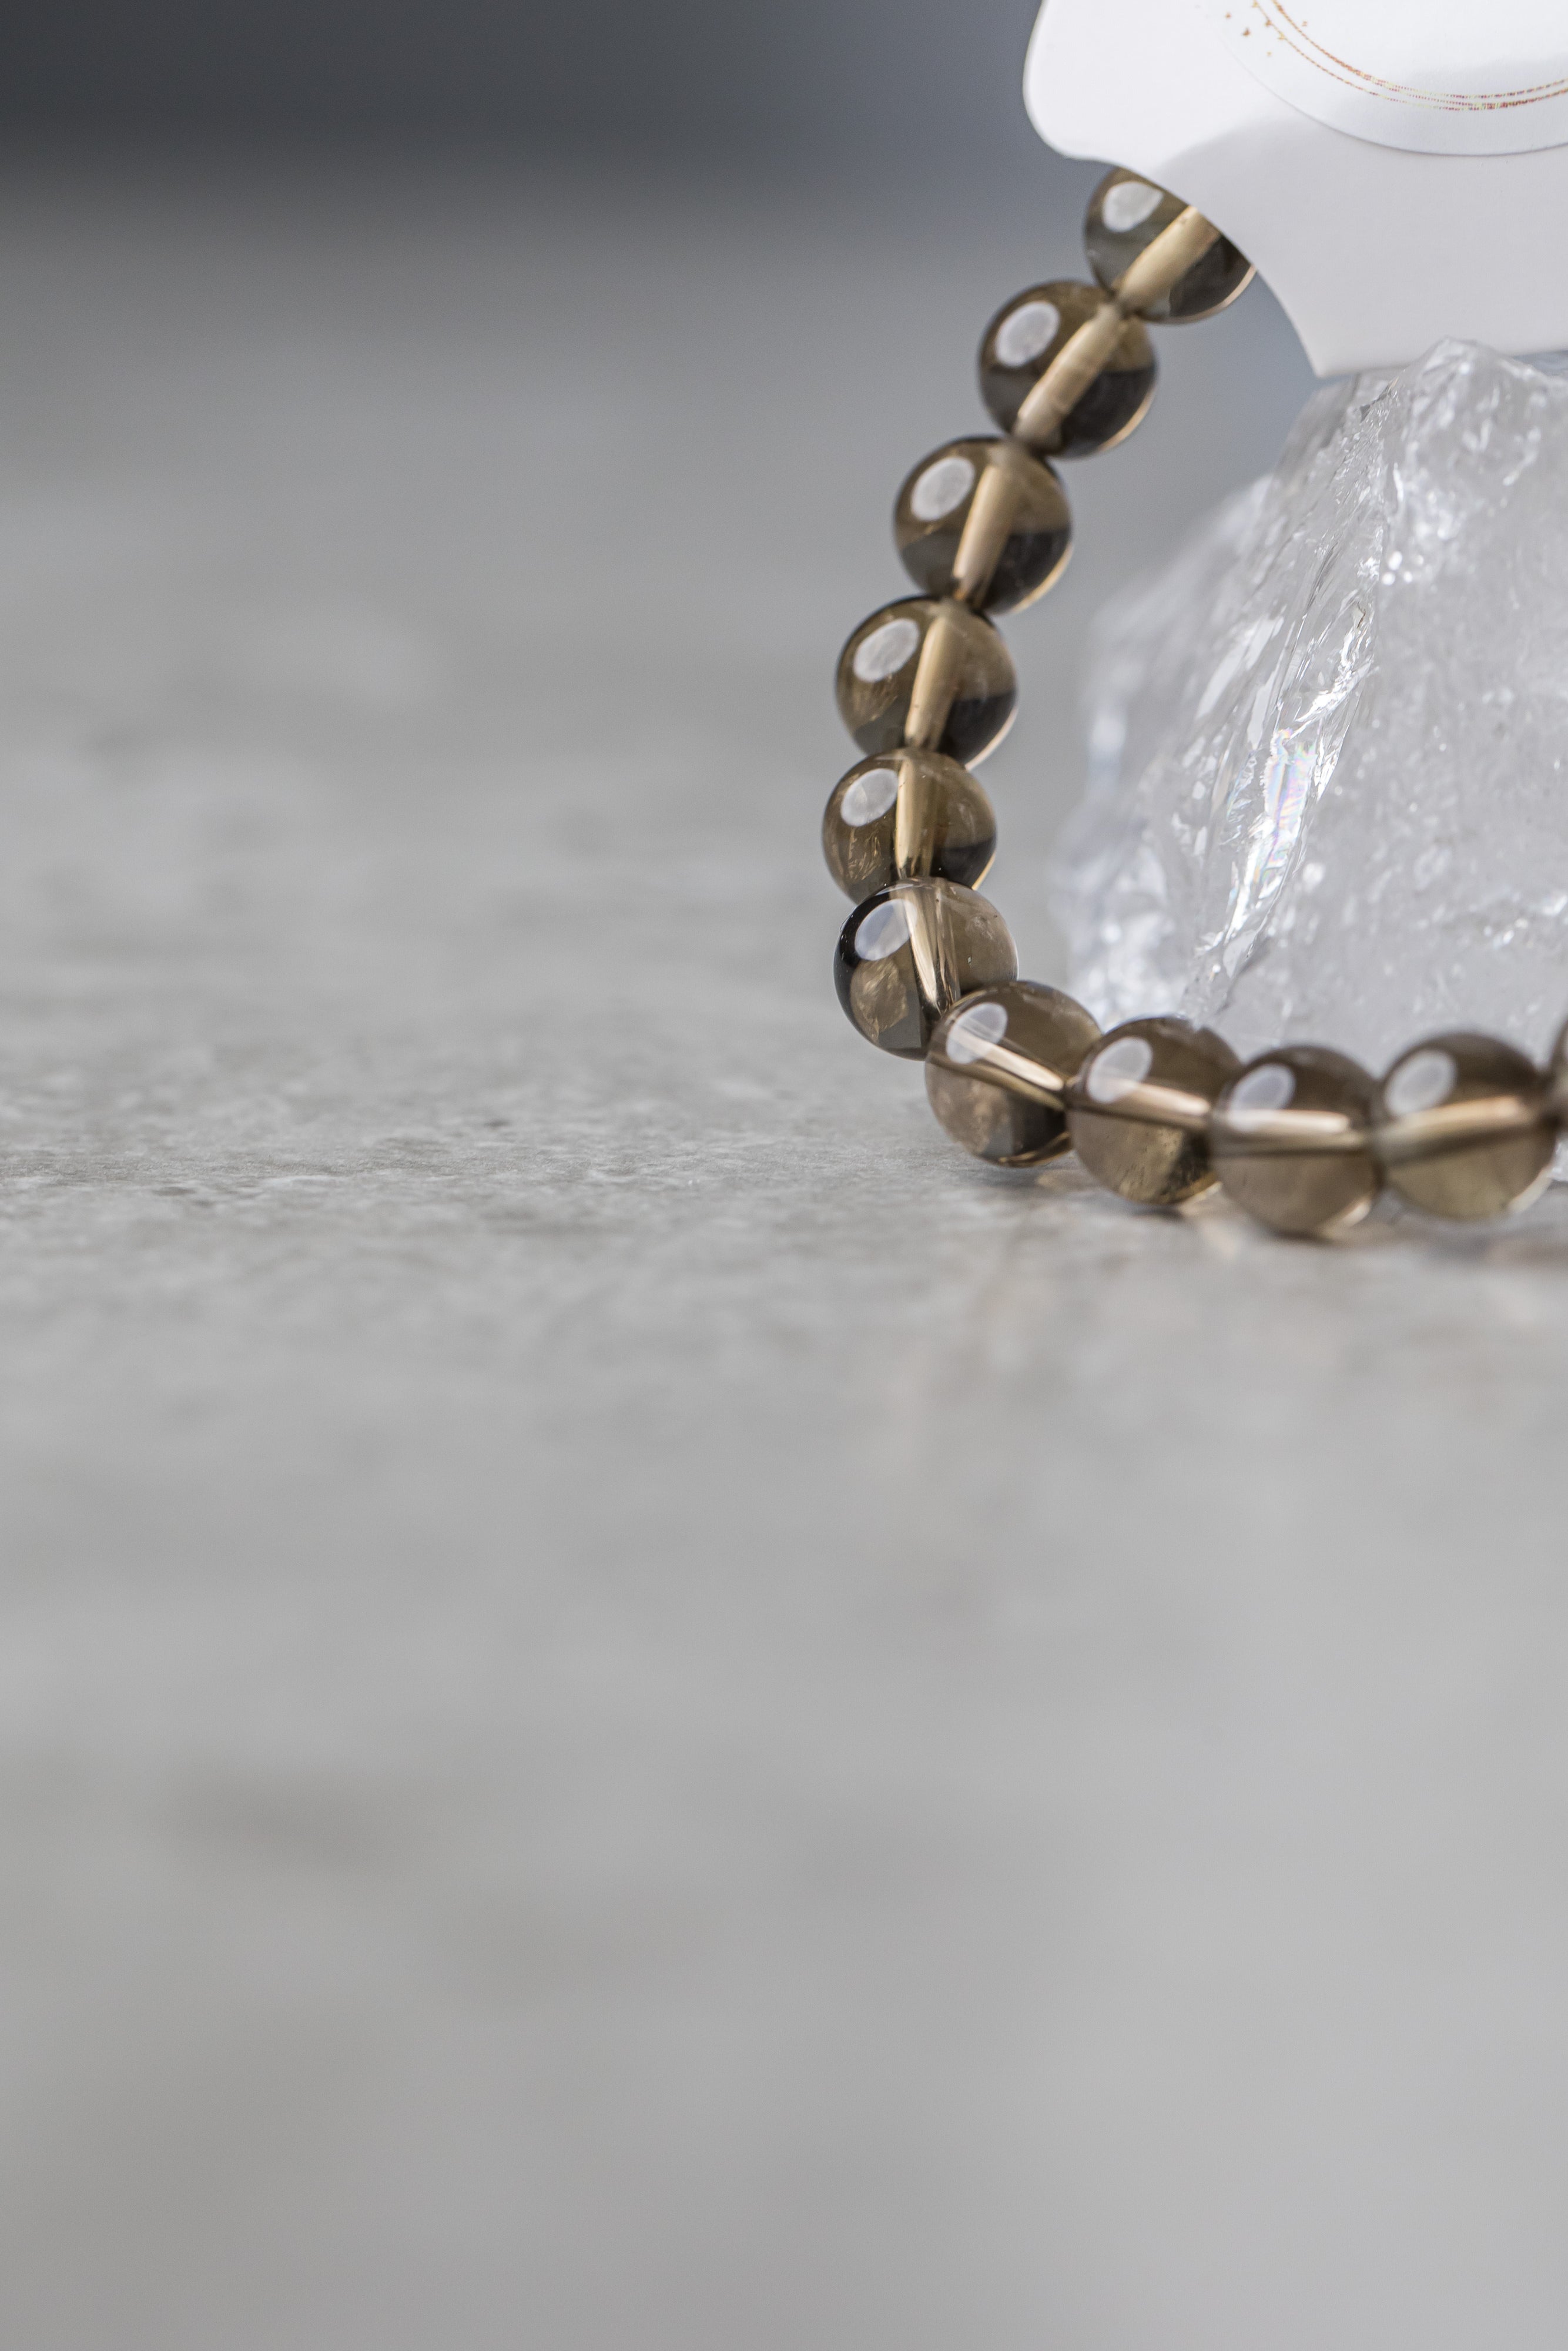 Smoky Quartz Power Bracelet - Grounding Crystal for Stress Relief, Protection & Root Chakra Balance - Everyday Rocks